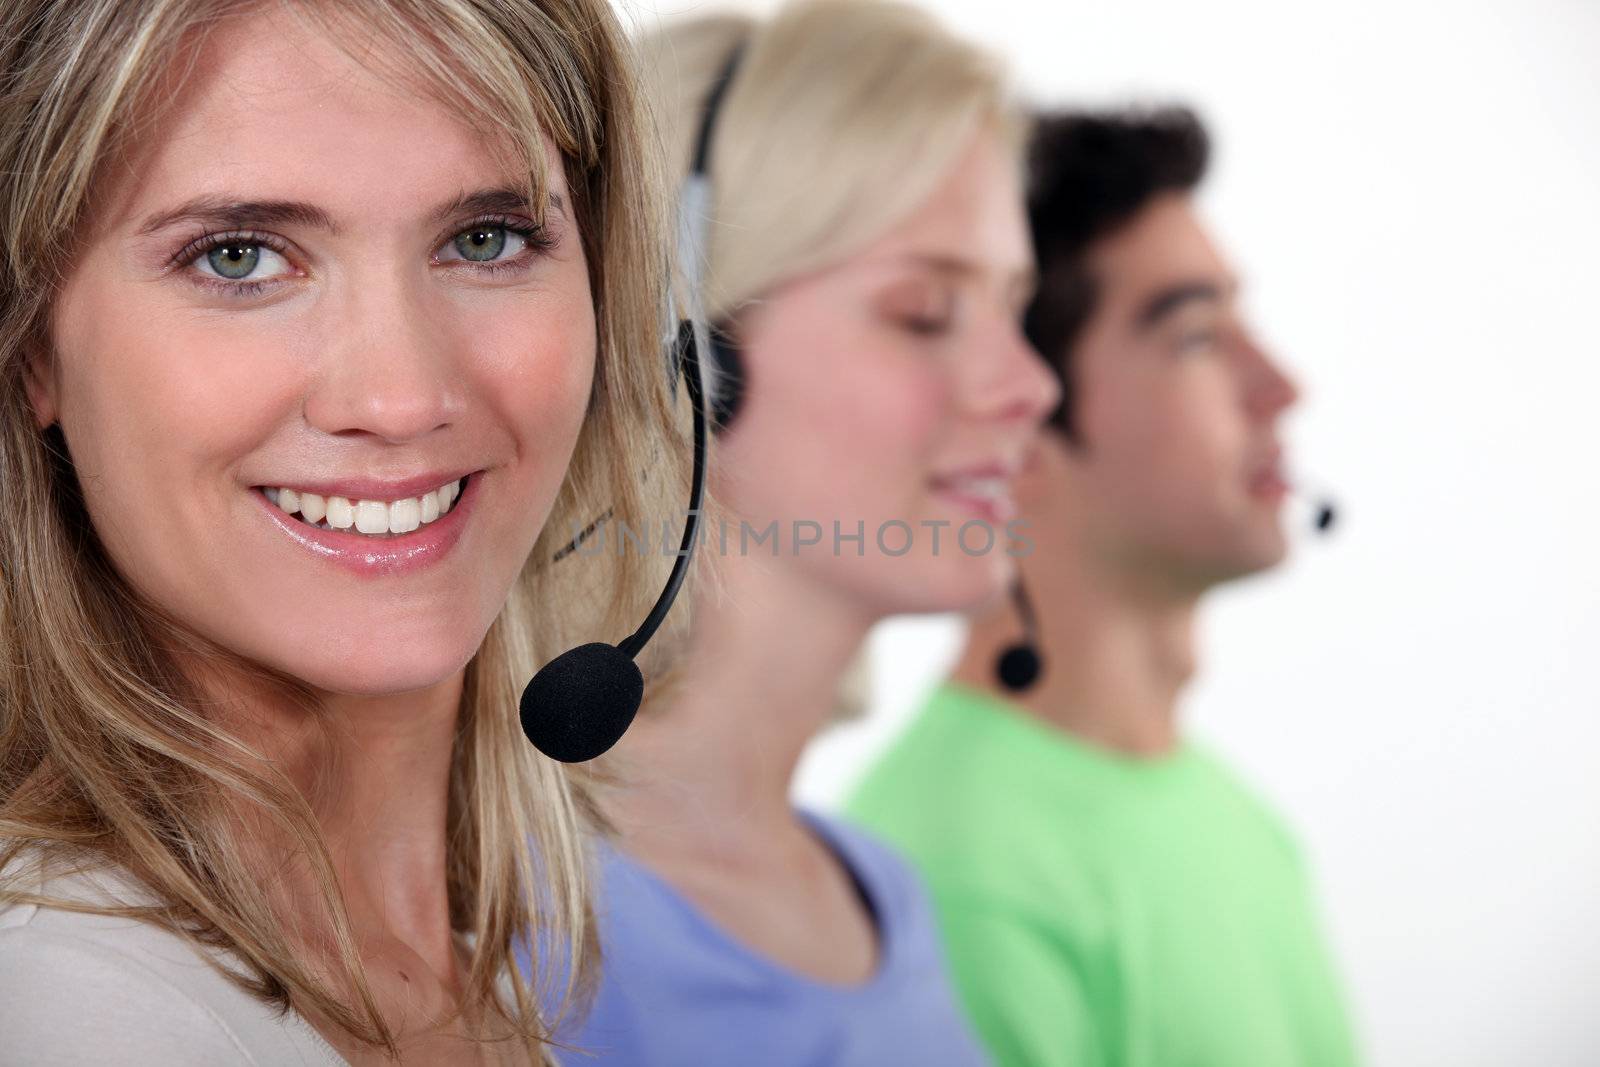 A customer service hotline. by phovoir